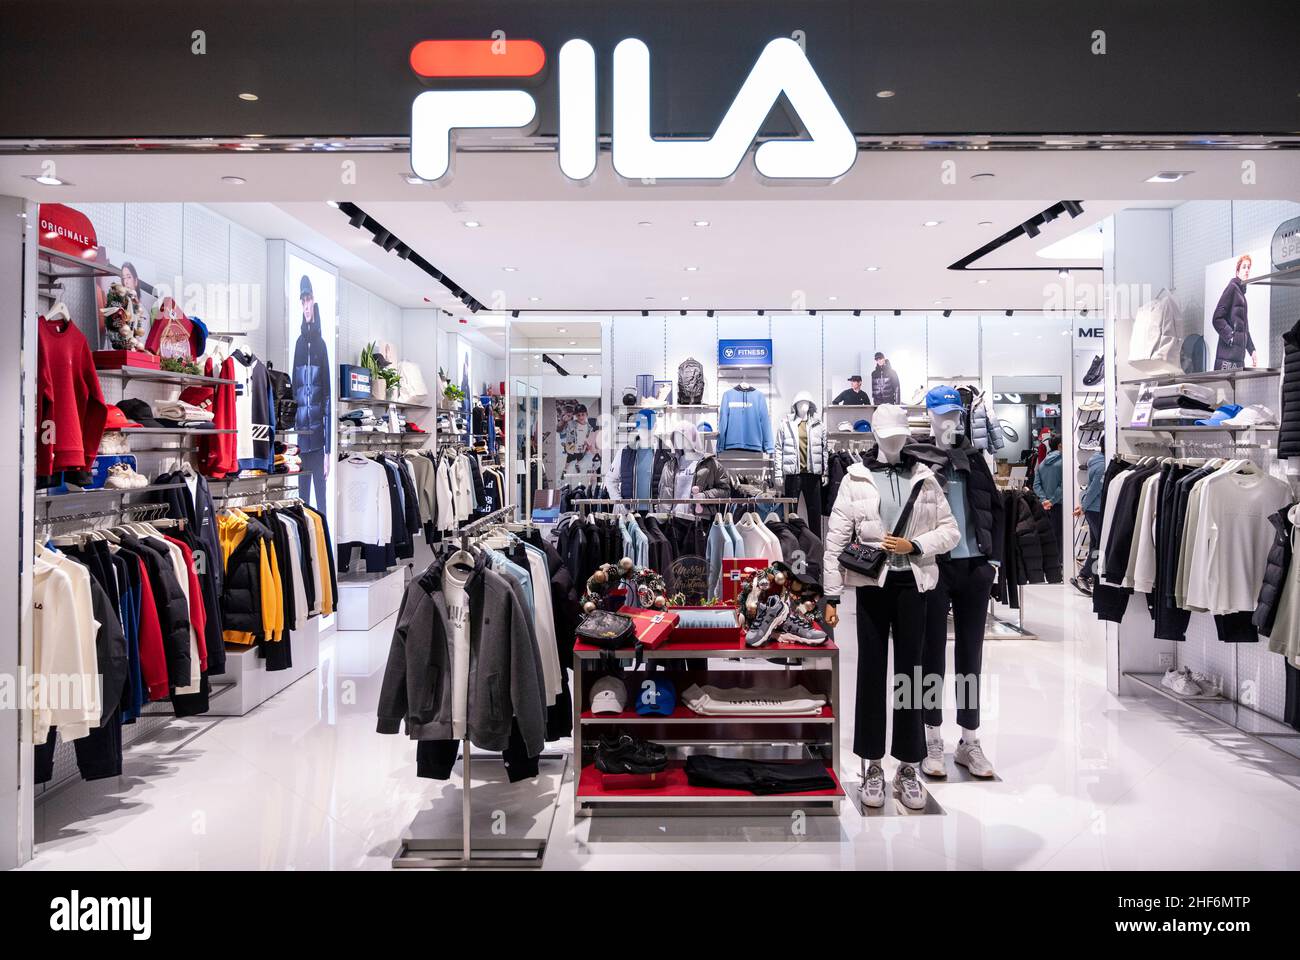 Economic Watch: Century-old Italy-born brand Fila gains new life